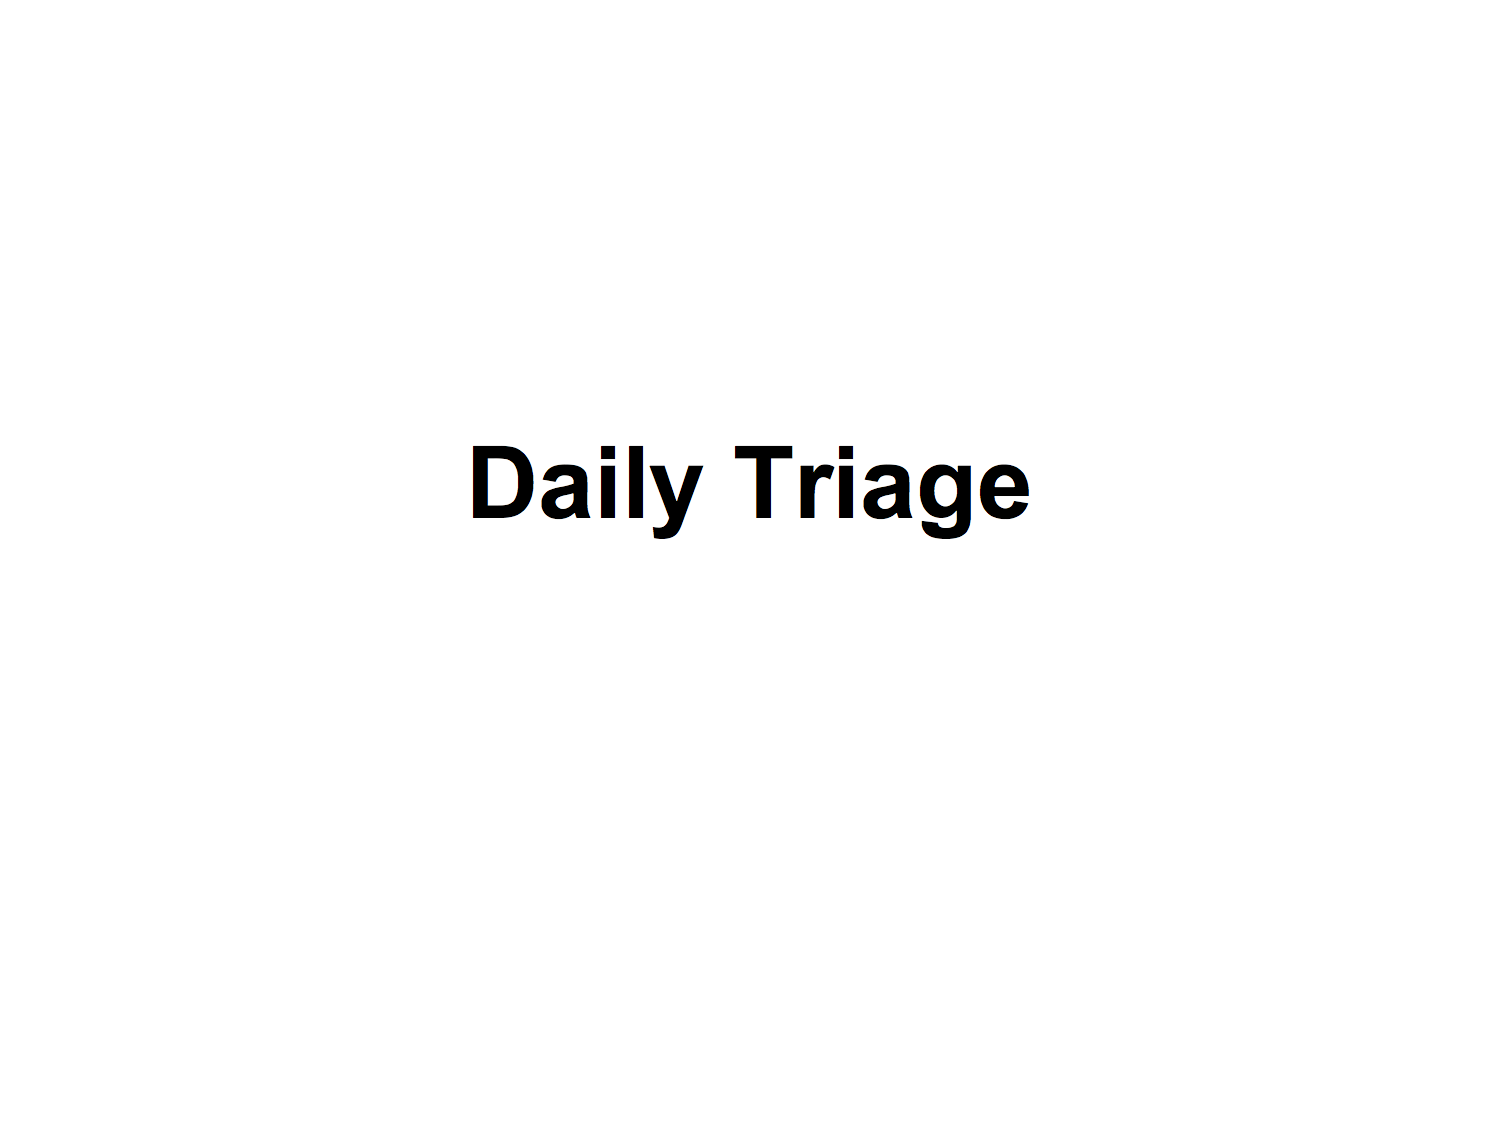 Daily Triage